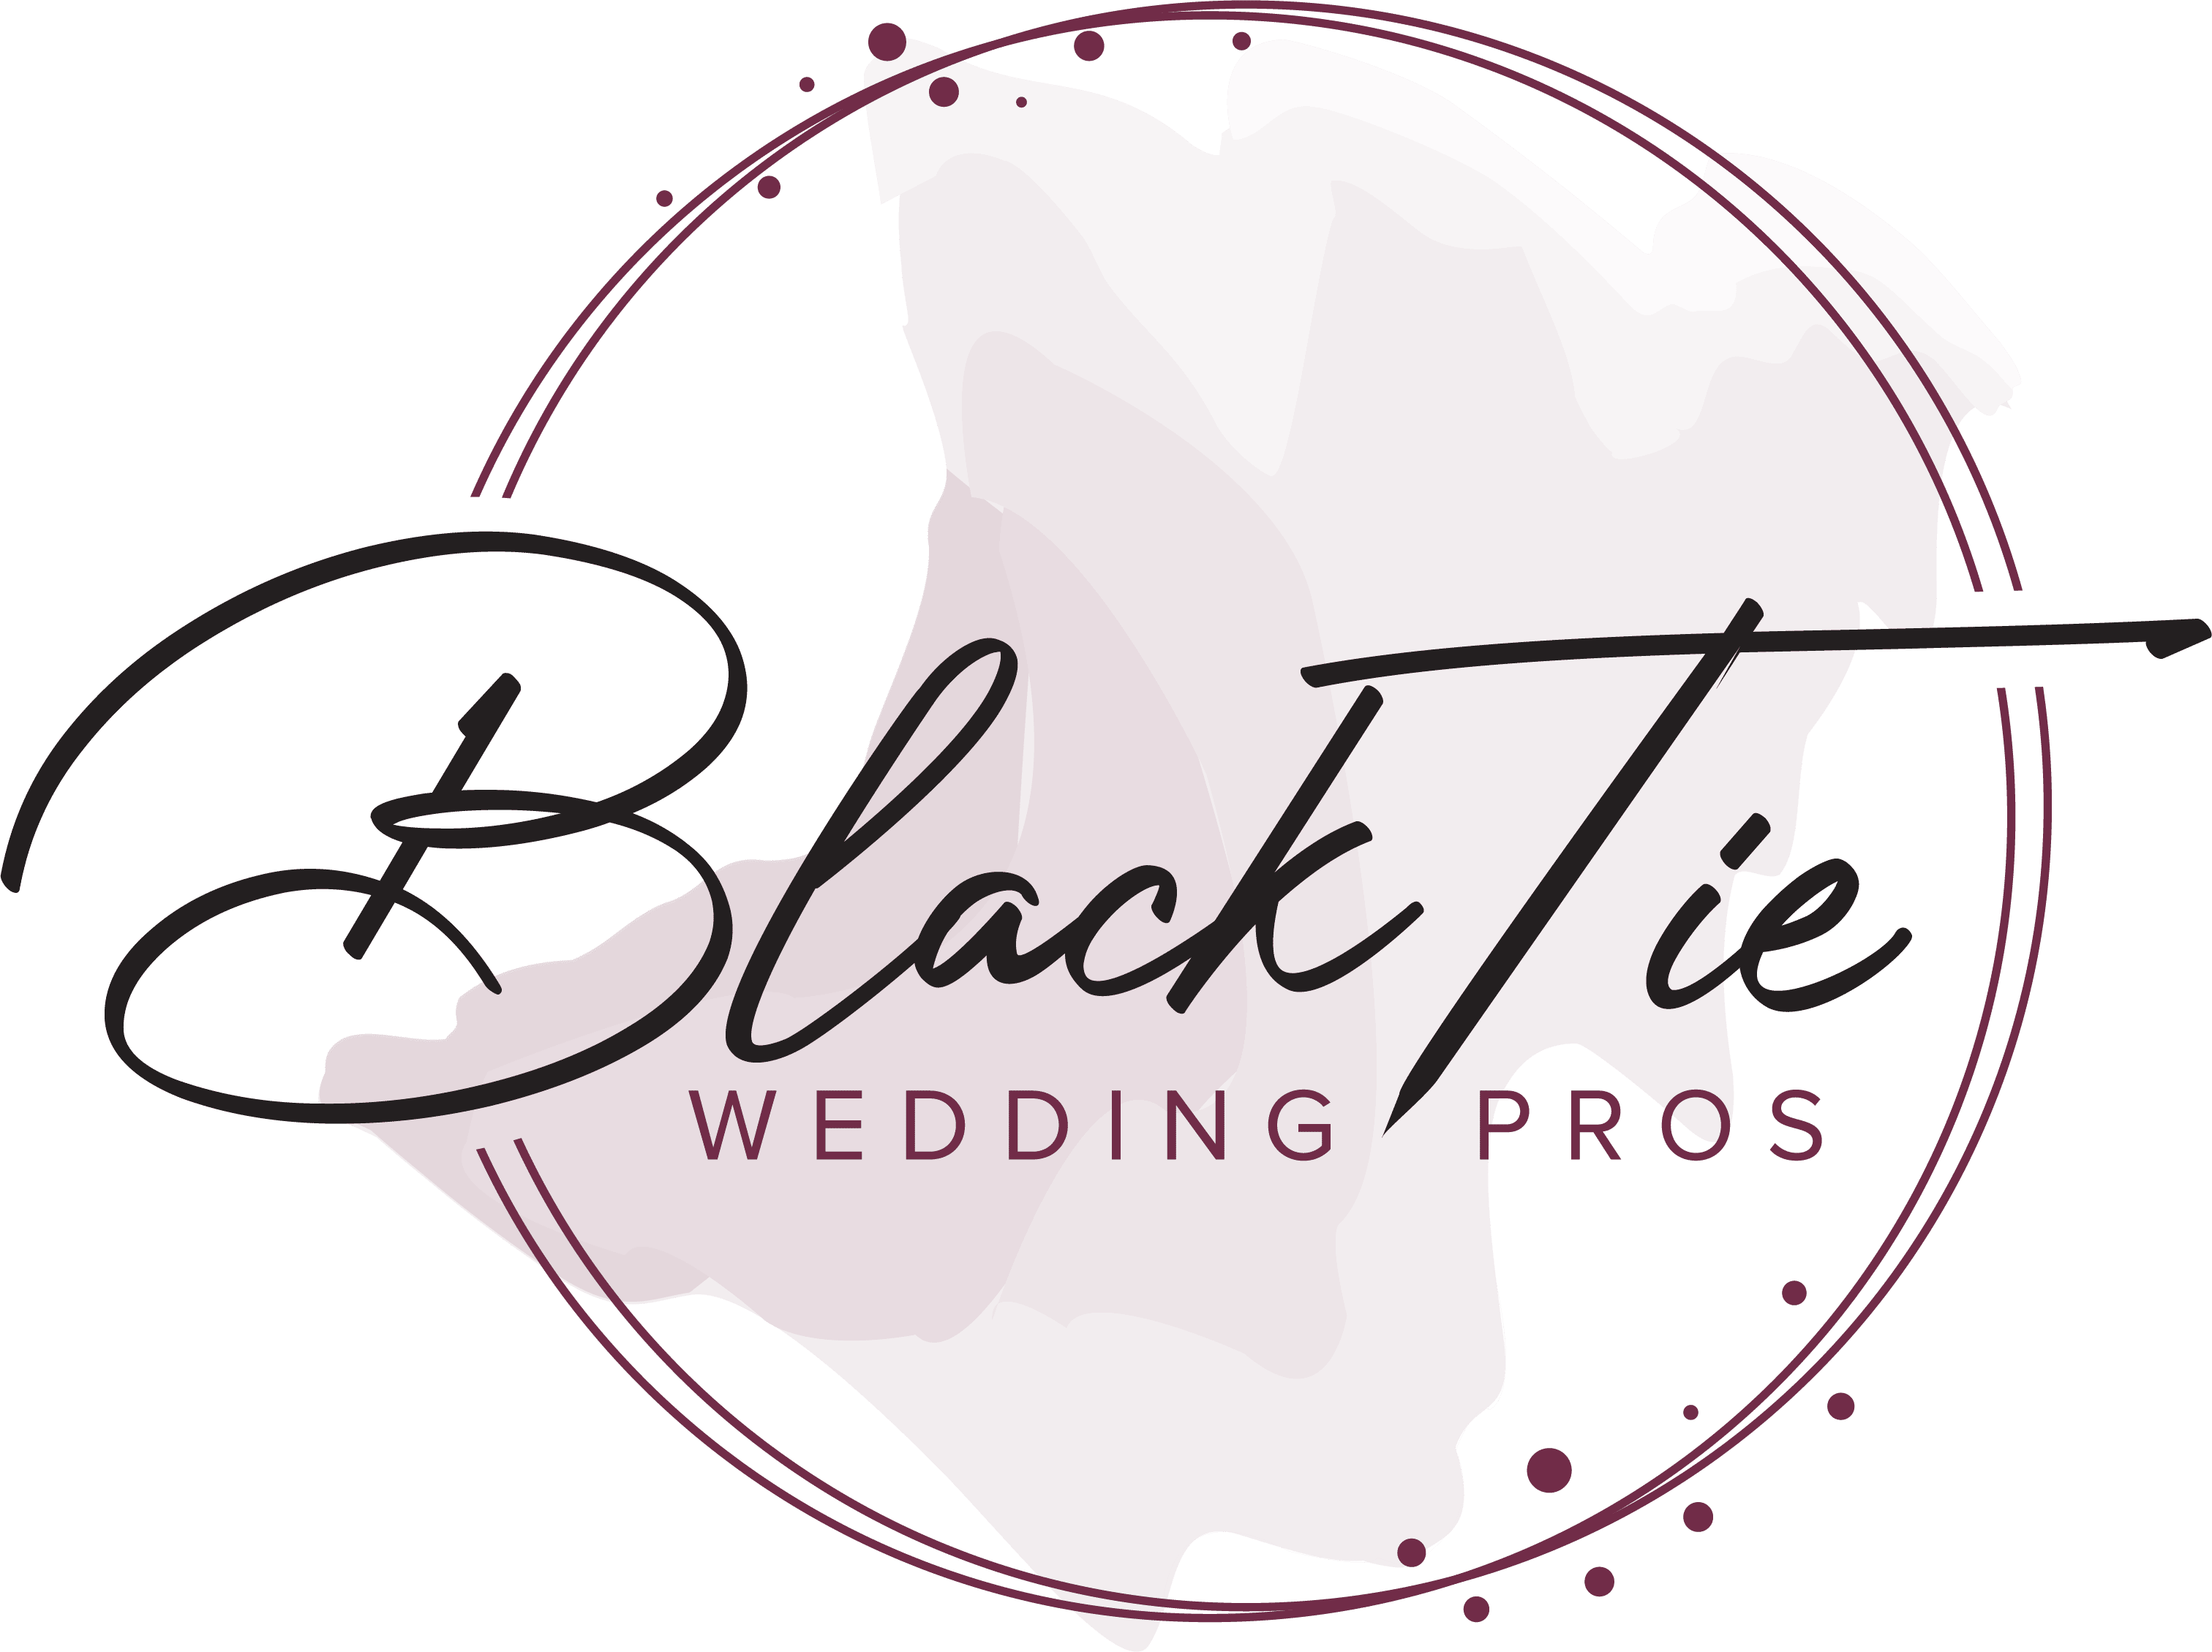 Black Tie Wedding Pros Presents: A Master Class with Alan Berg!